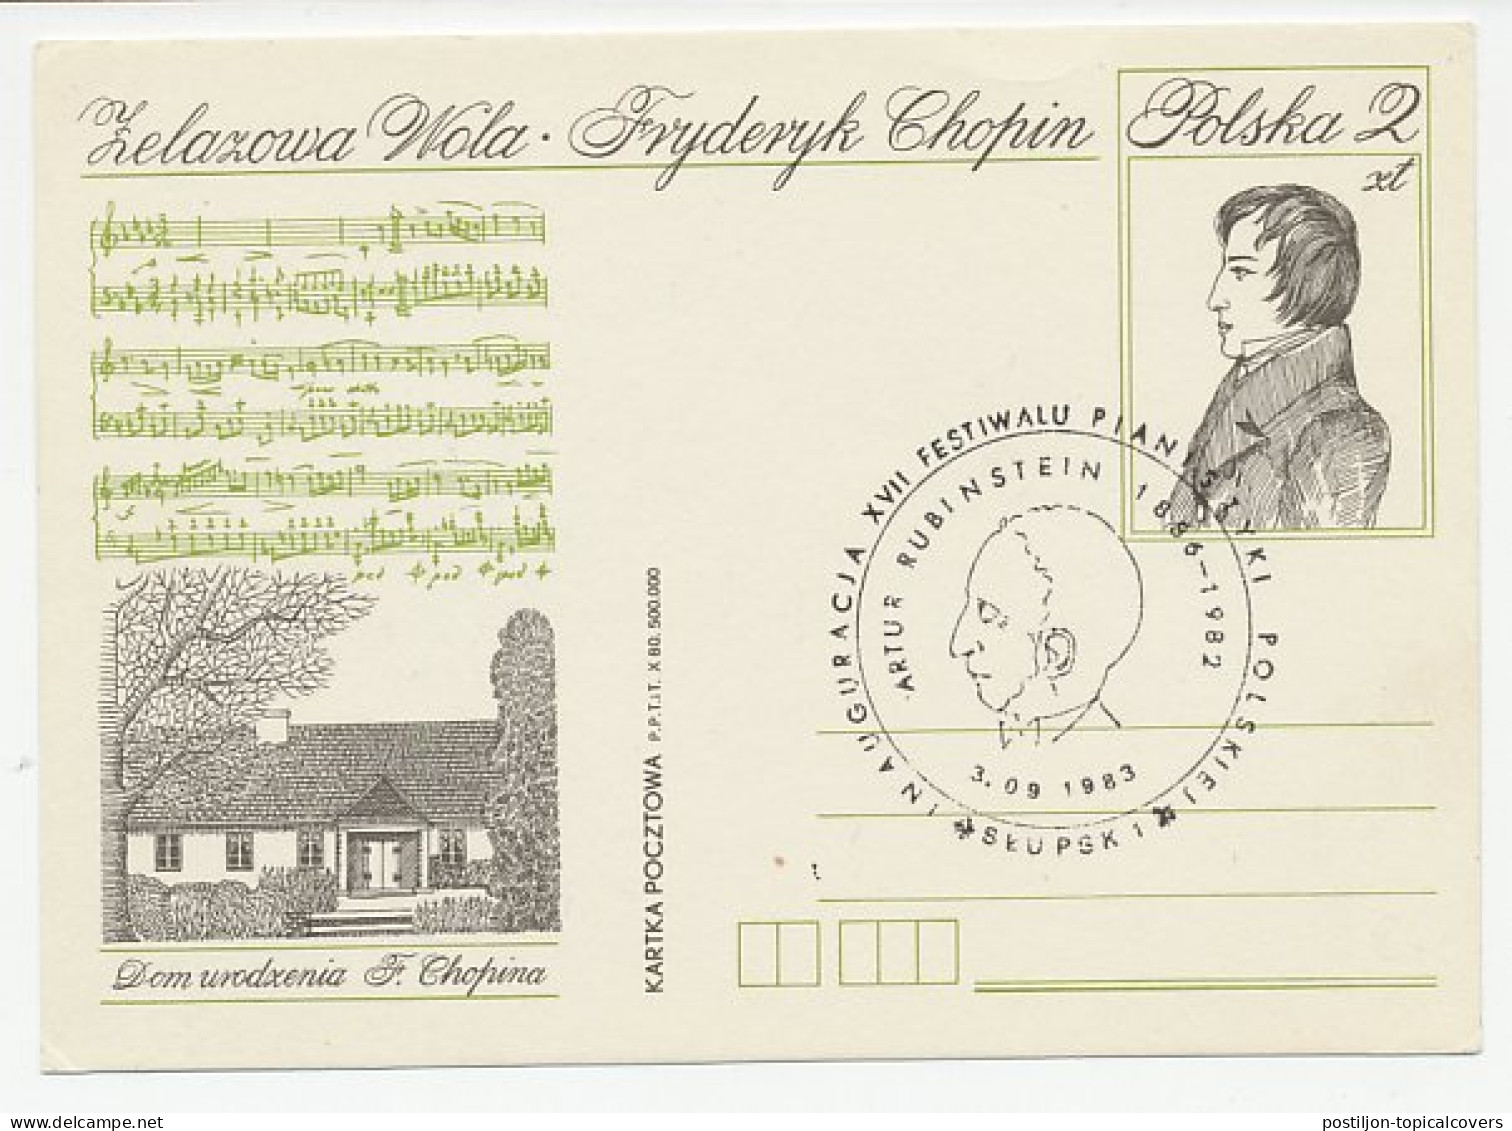 Postal Stationery Poland 1983 Frederic Chopin - Artur Rubinstein - Piano - Musique